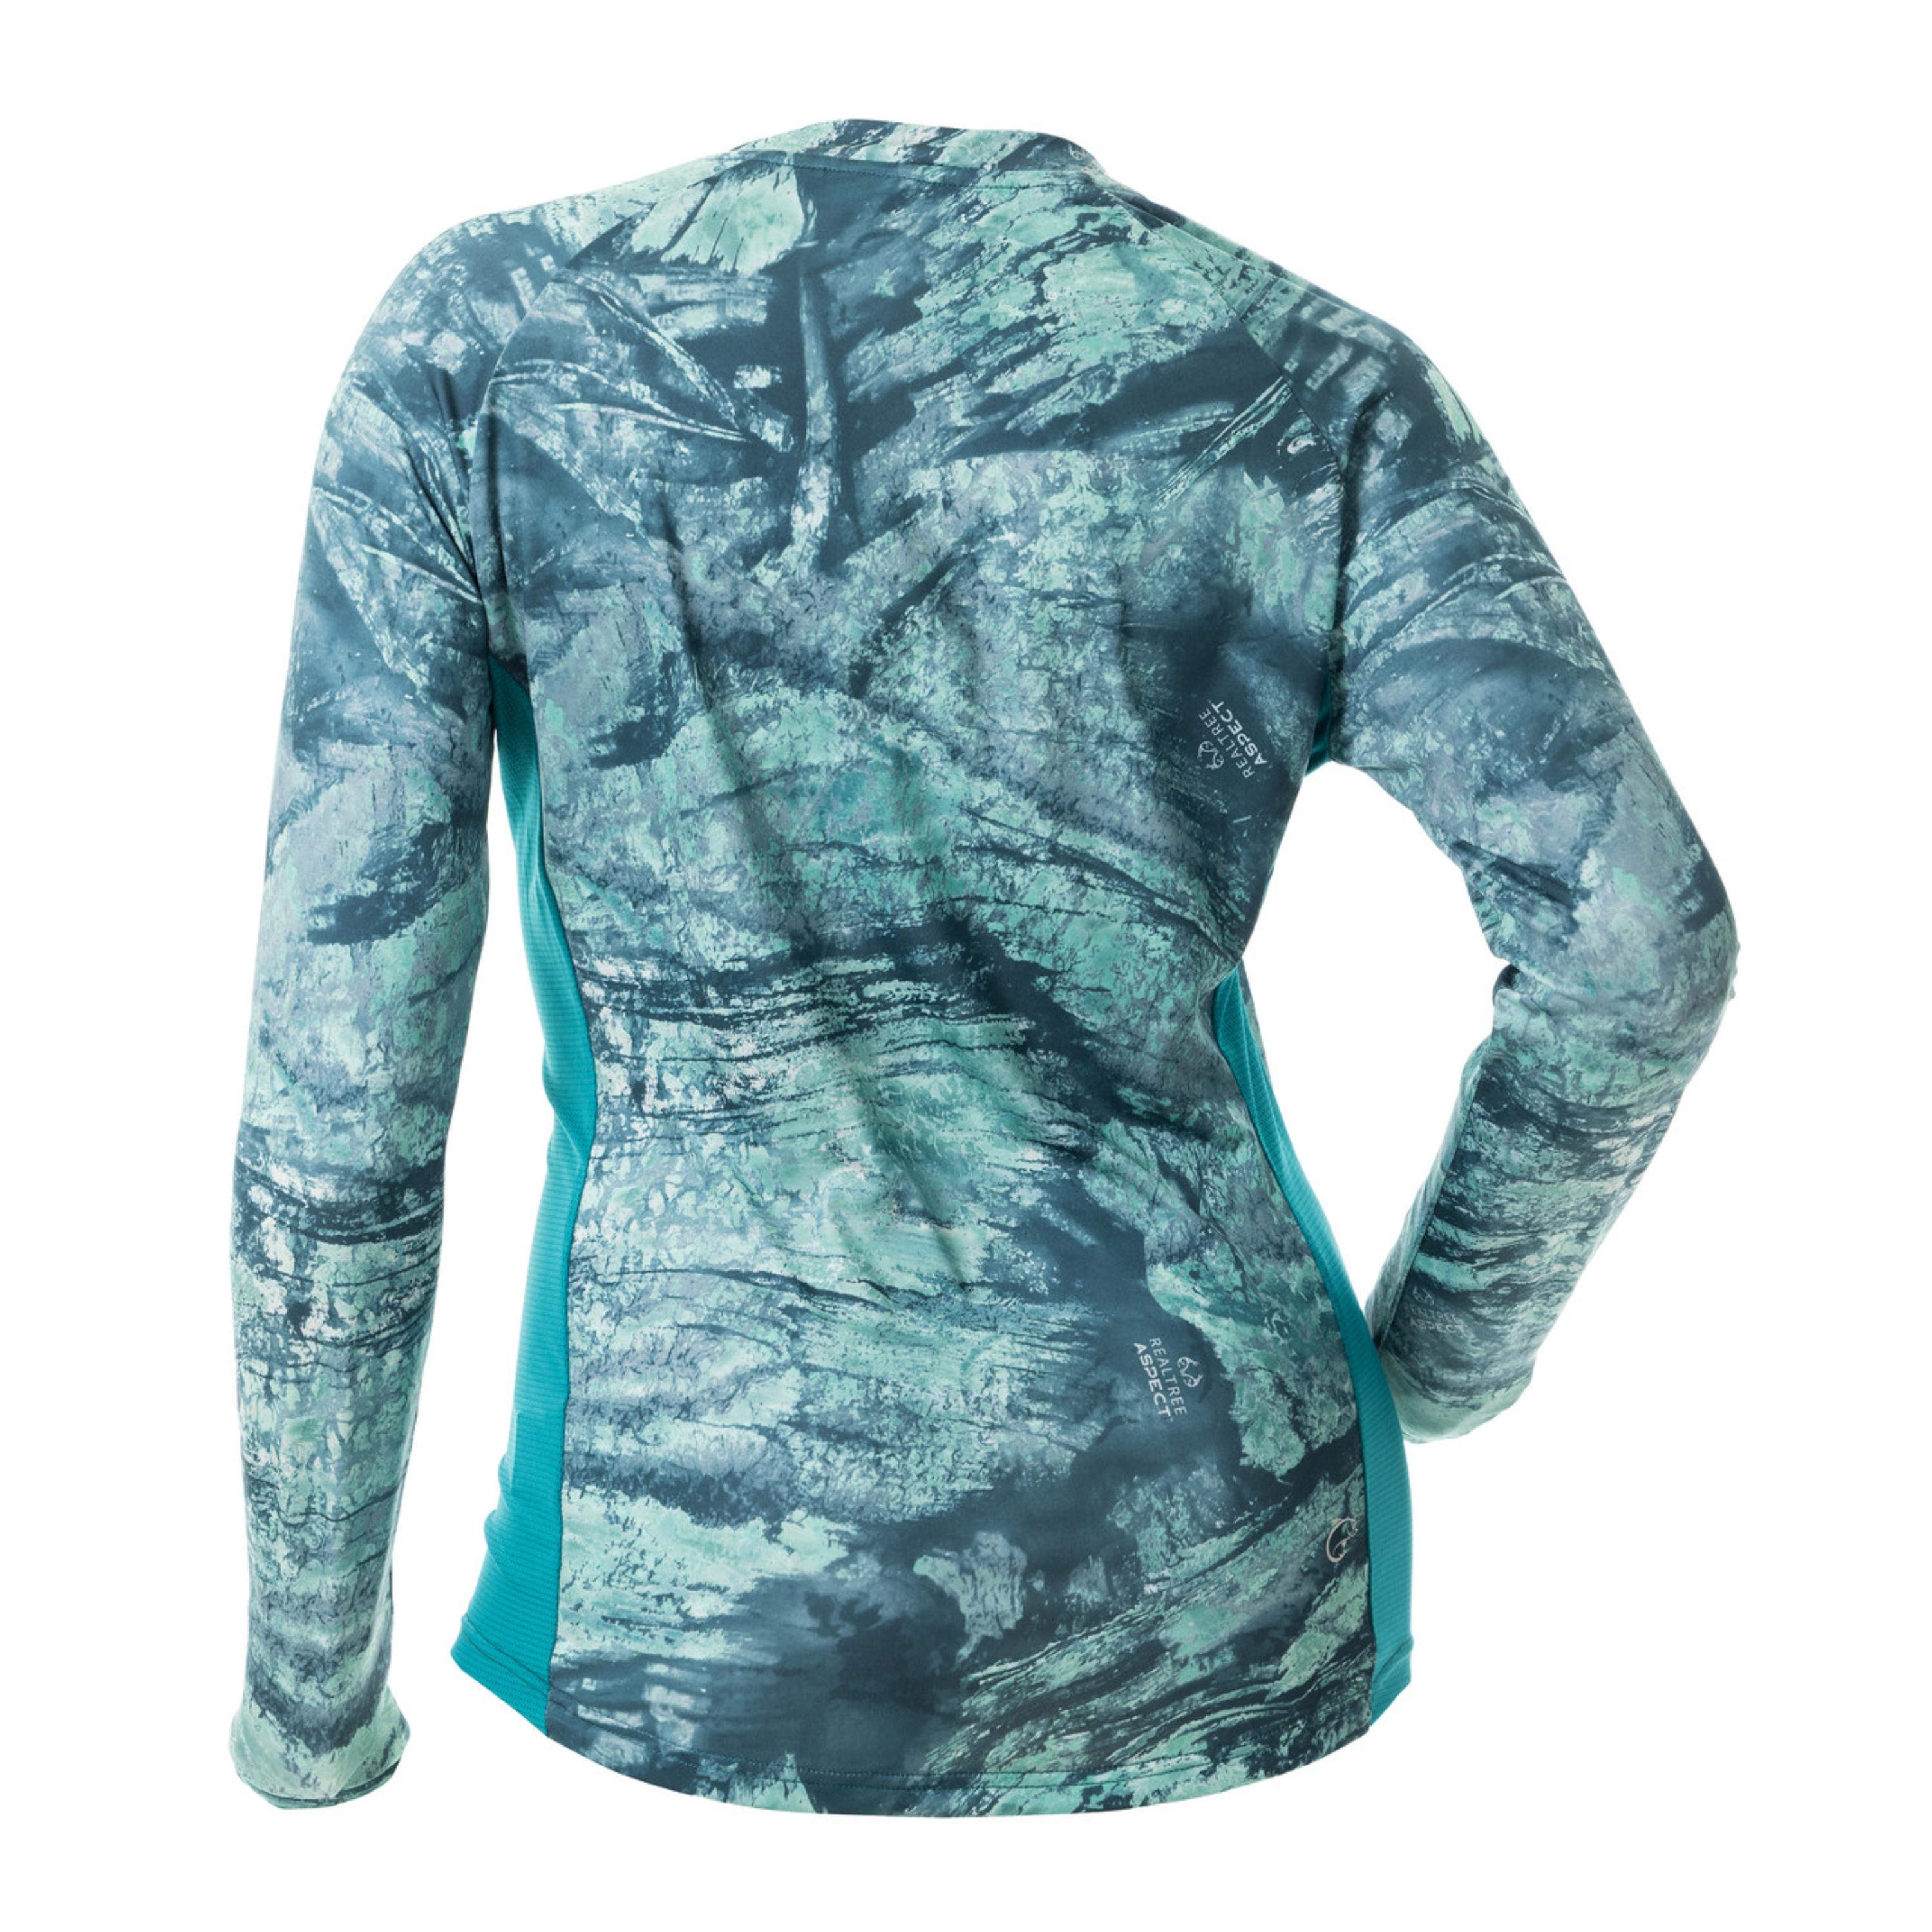 Realtree Aspect Women's Long Sleeve Reversible Fishing Shirt